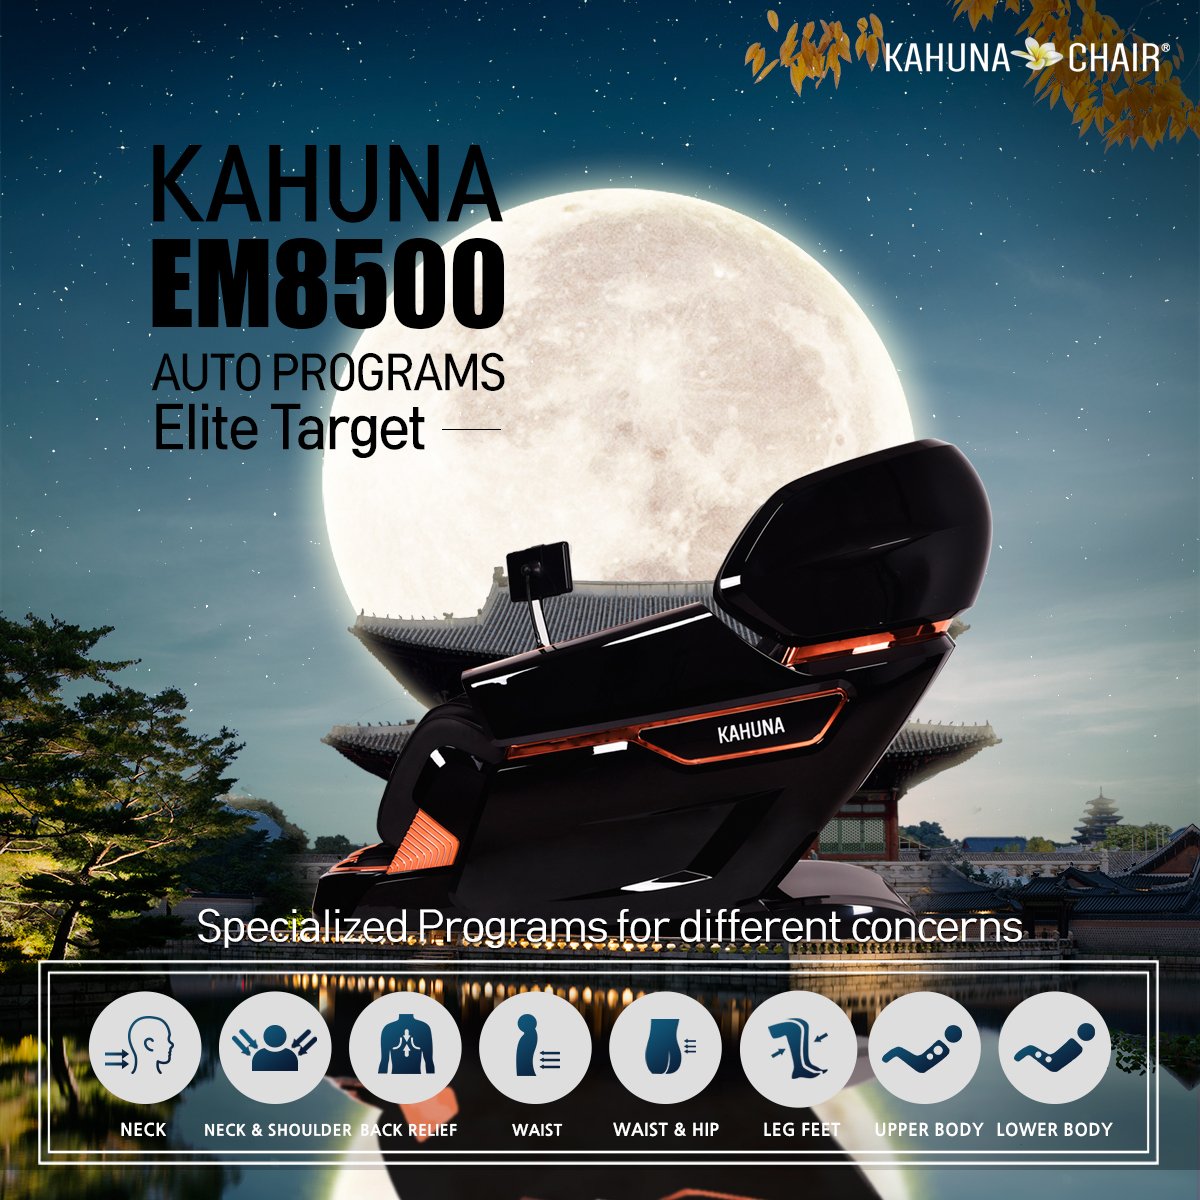 kahuna massage chair em8500 auto programs Elite target